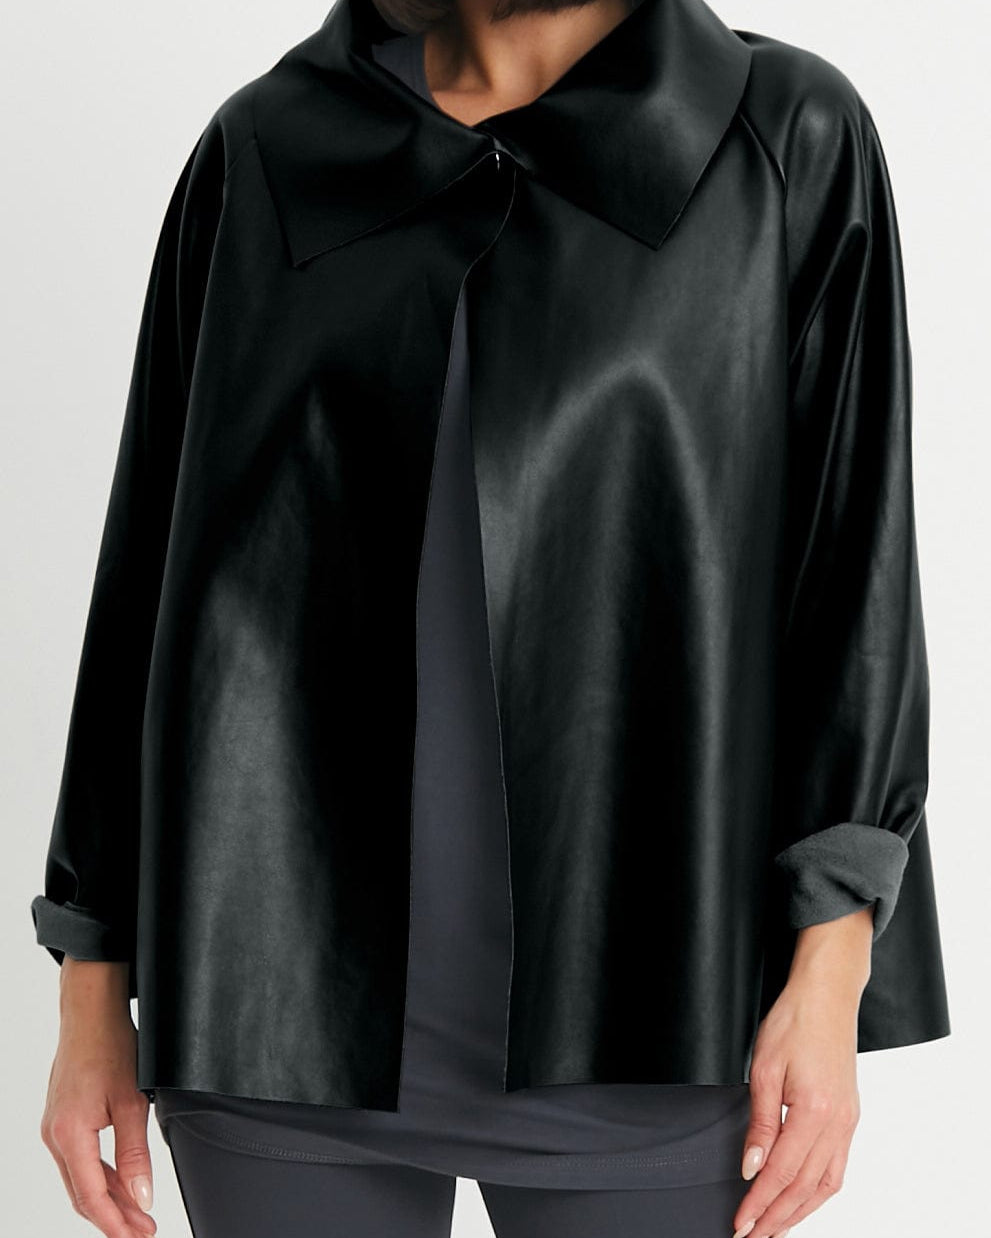 PLANET by Lauren G Women's Jackets Black / 2 Planet Vegan Leather Shirttail Jacket